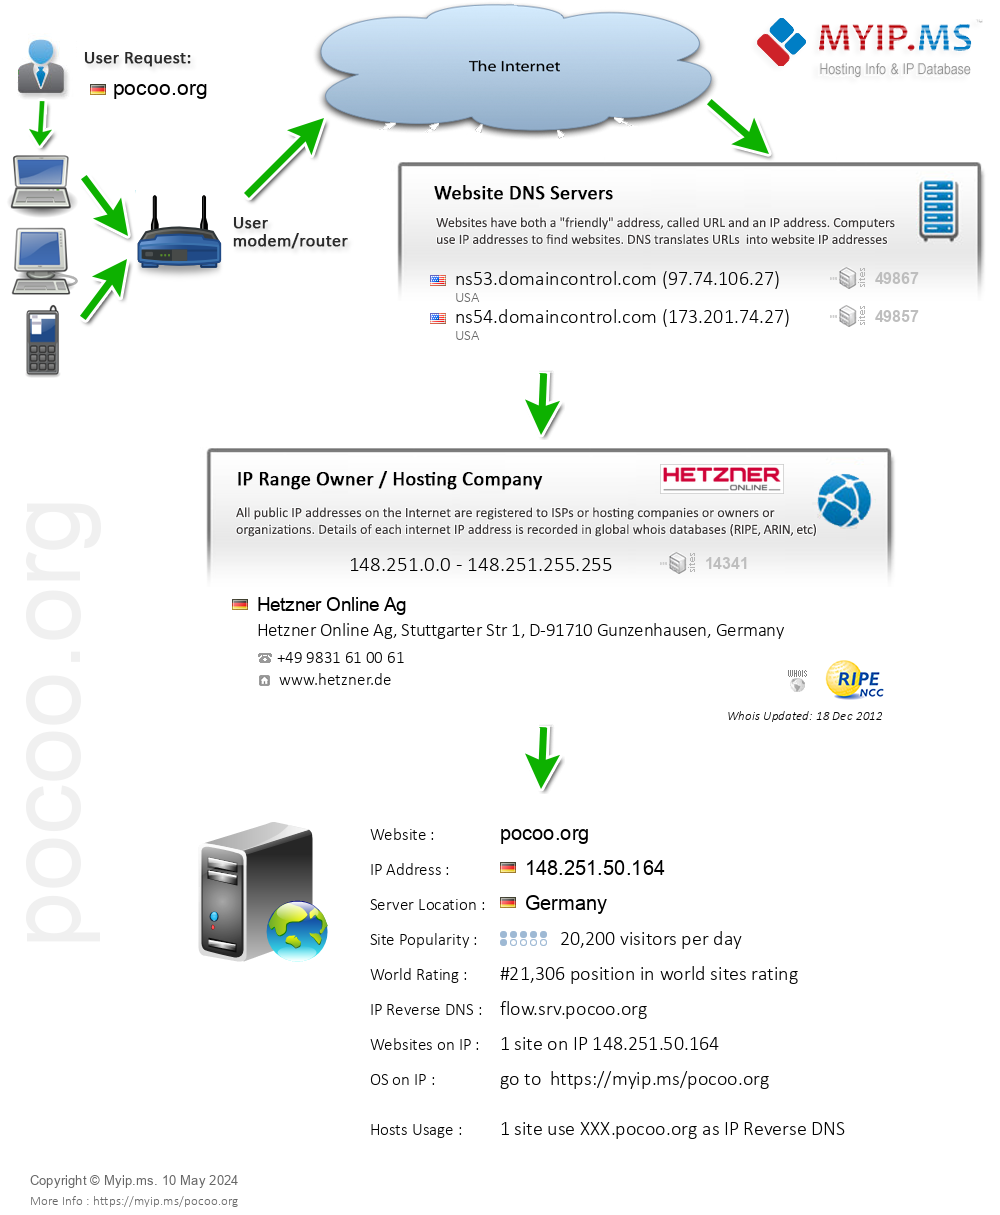 Pocoo.org - Website Hosting Visual IP Diagram